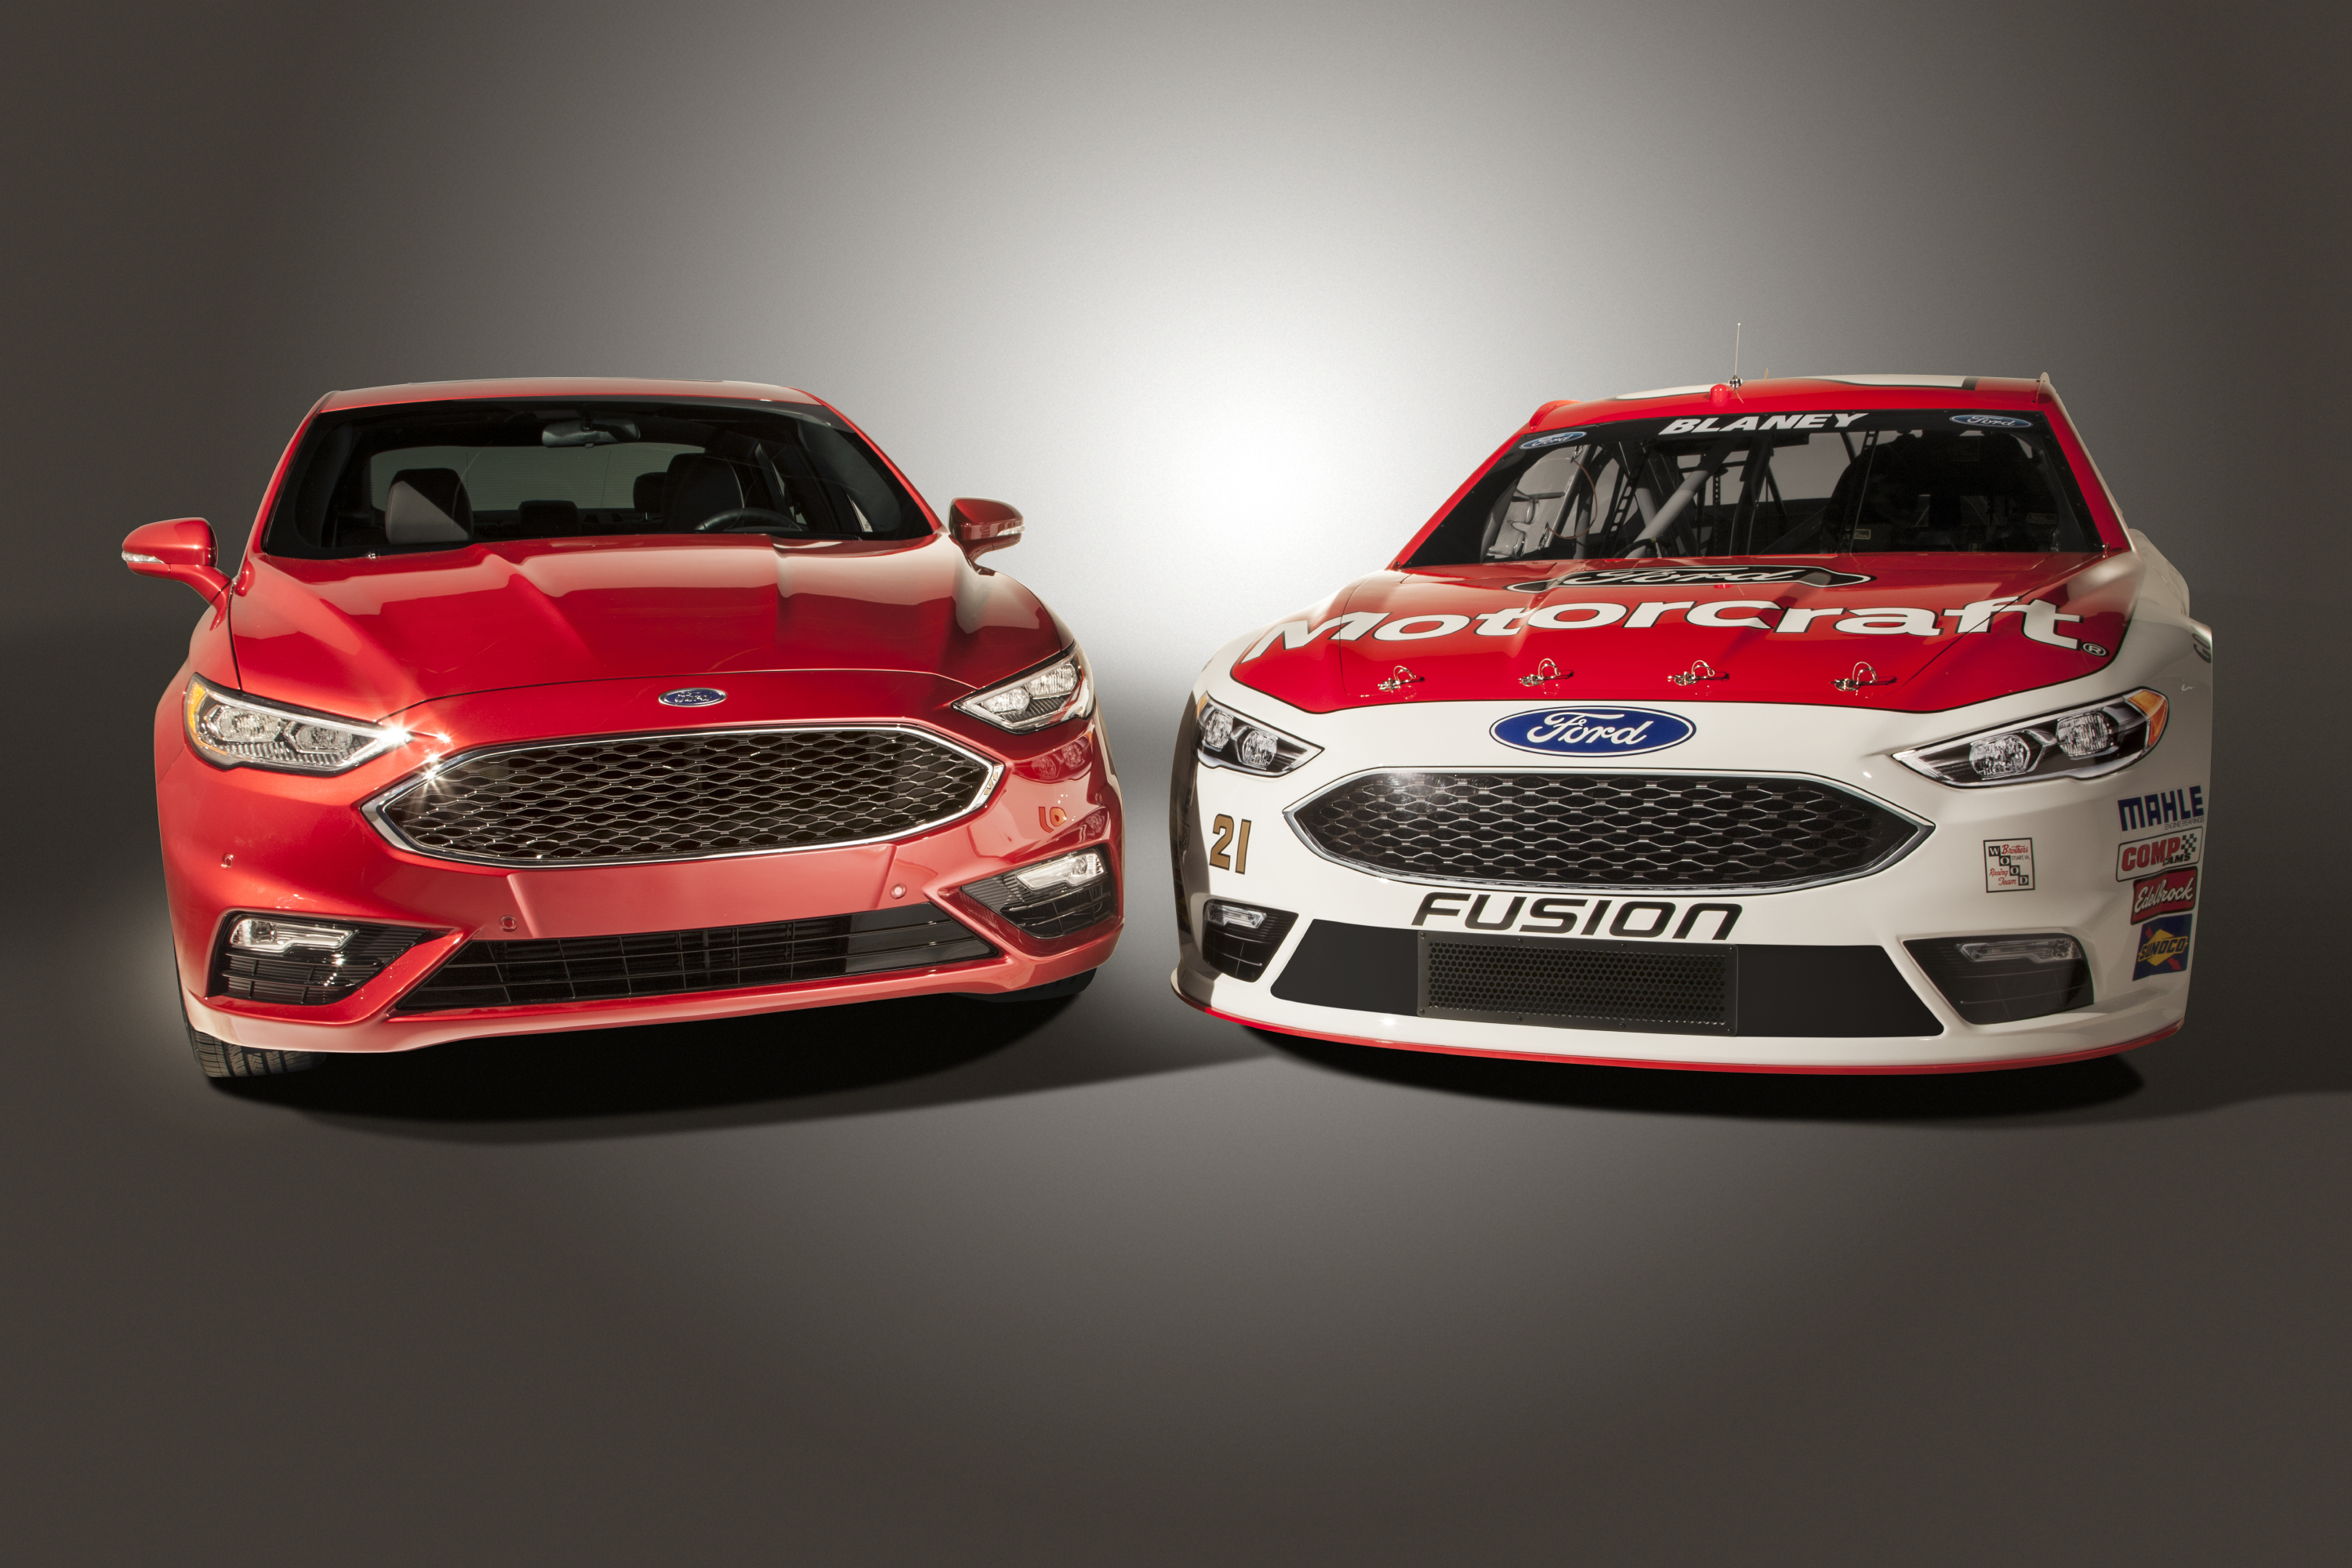 Ford Motor Company Wins NASCAR ‘Driving Business Award’